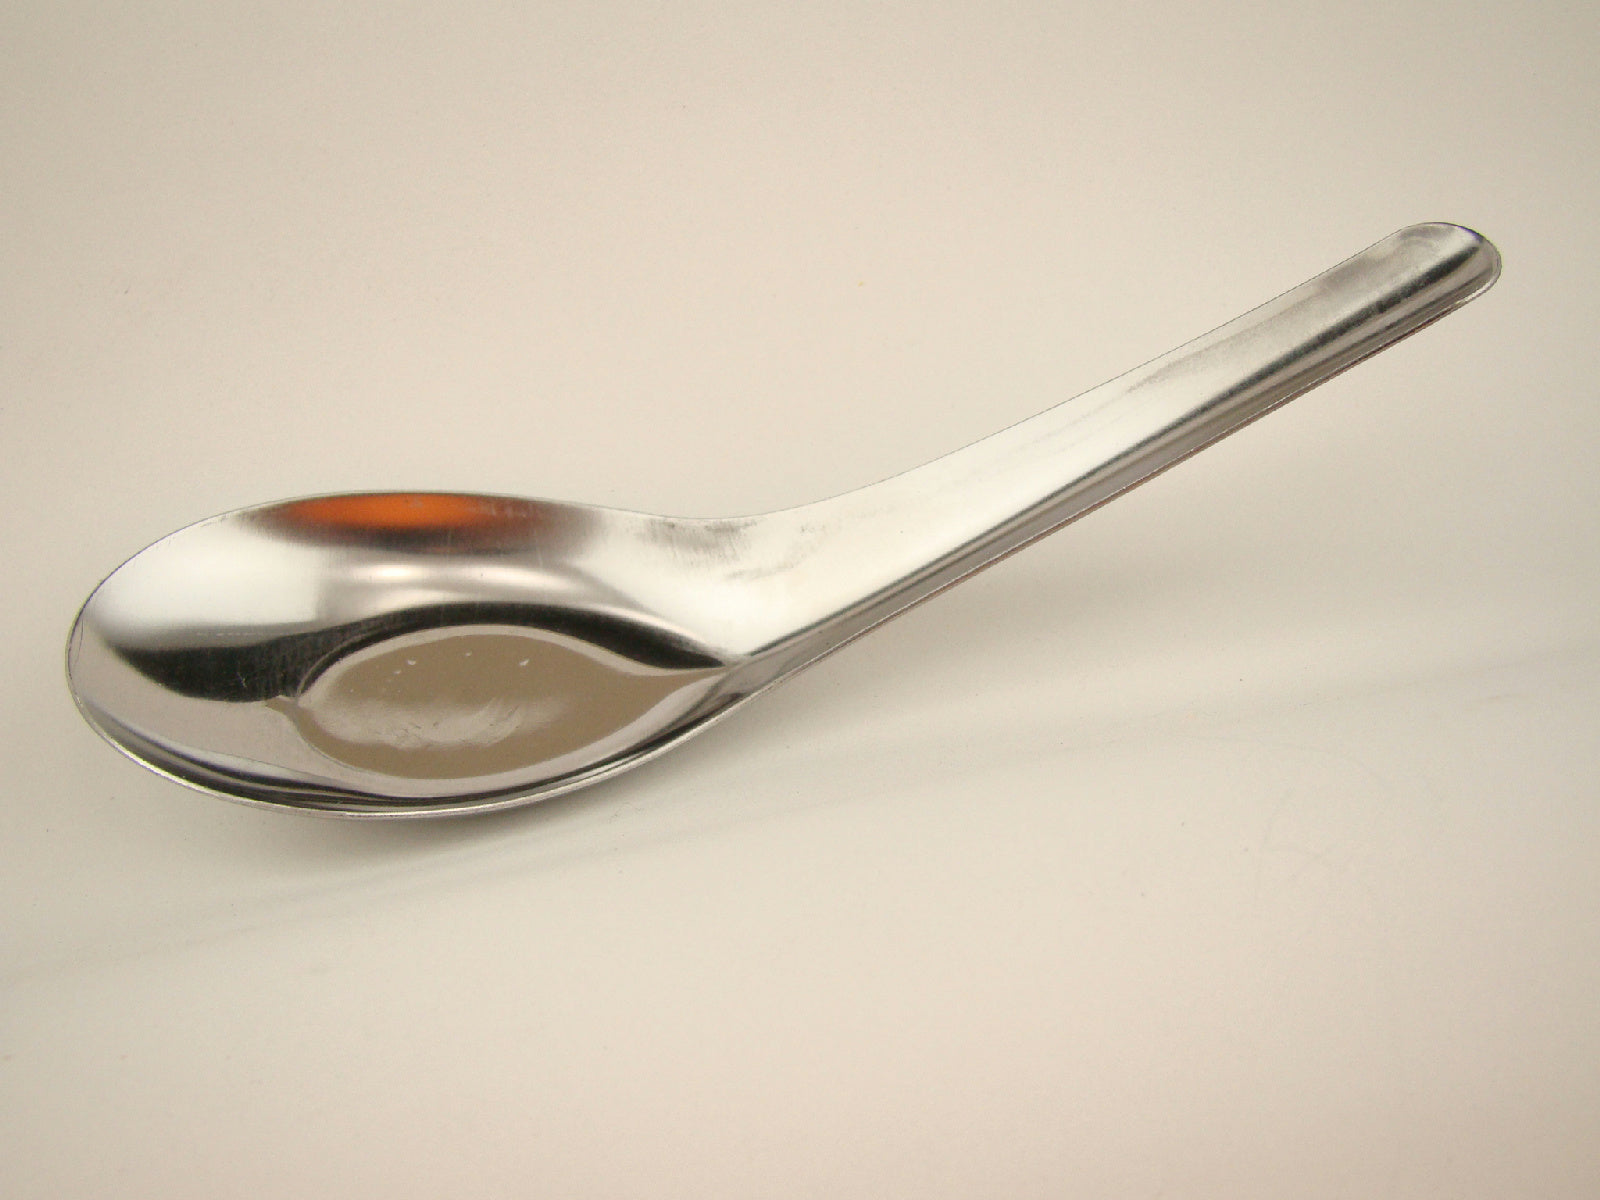 Flux Spoon - For Smelting & Melting